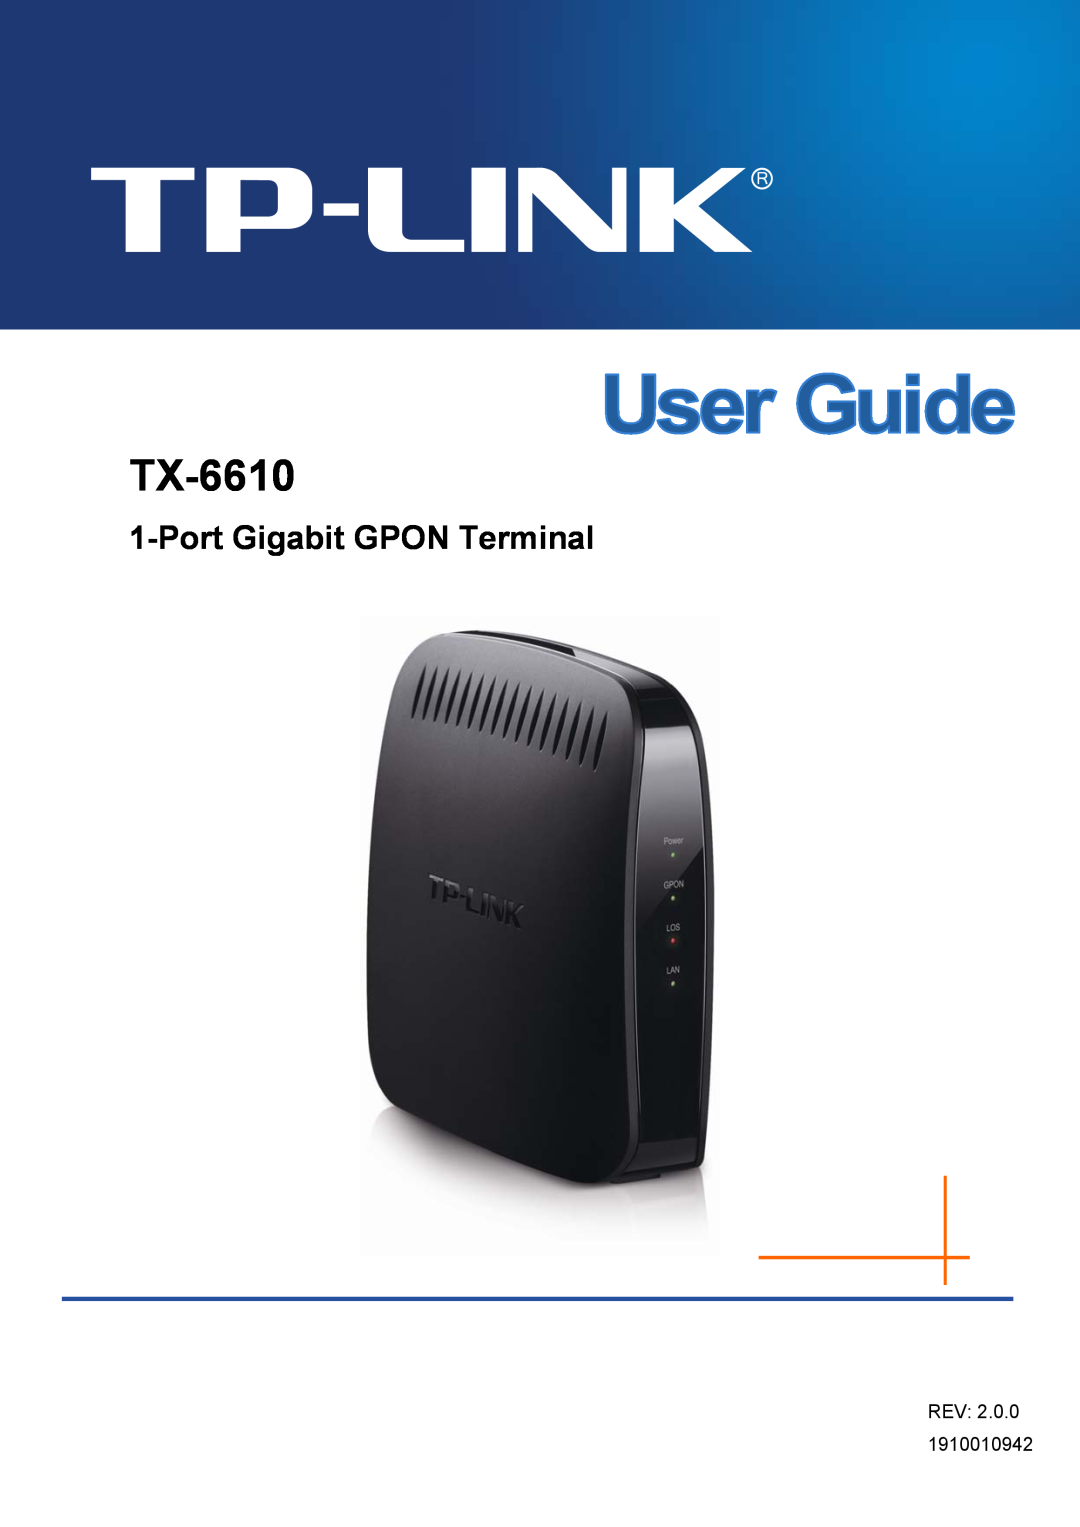 TP-Link TX-6610 manual Port Gigabit GPON Terminal 